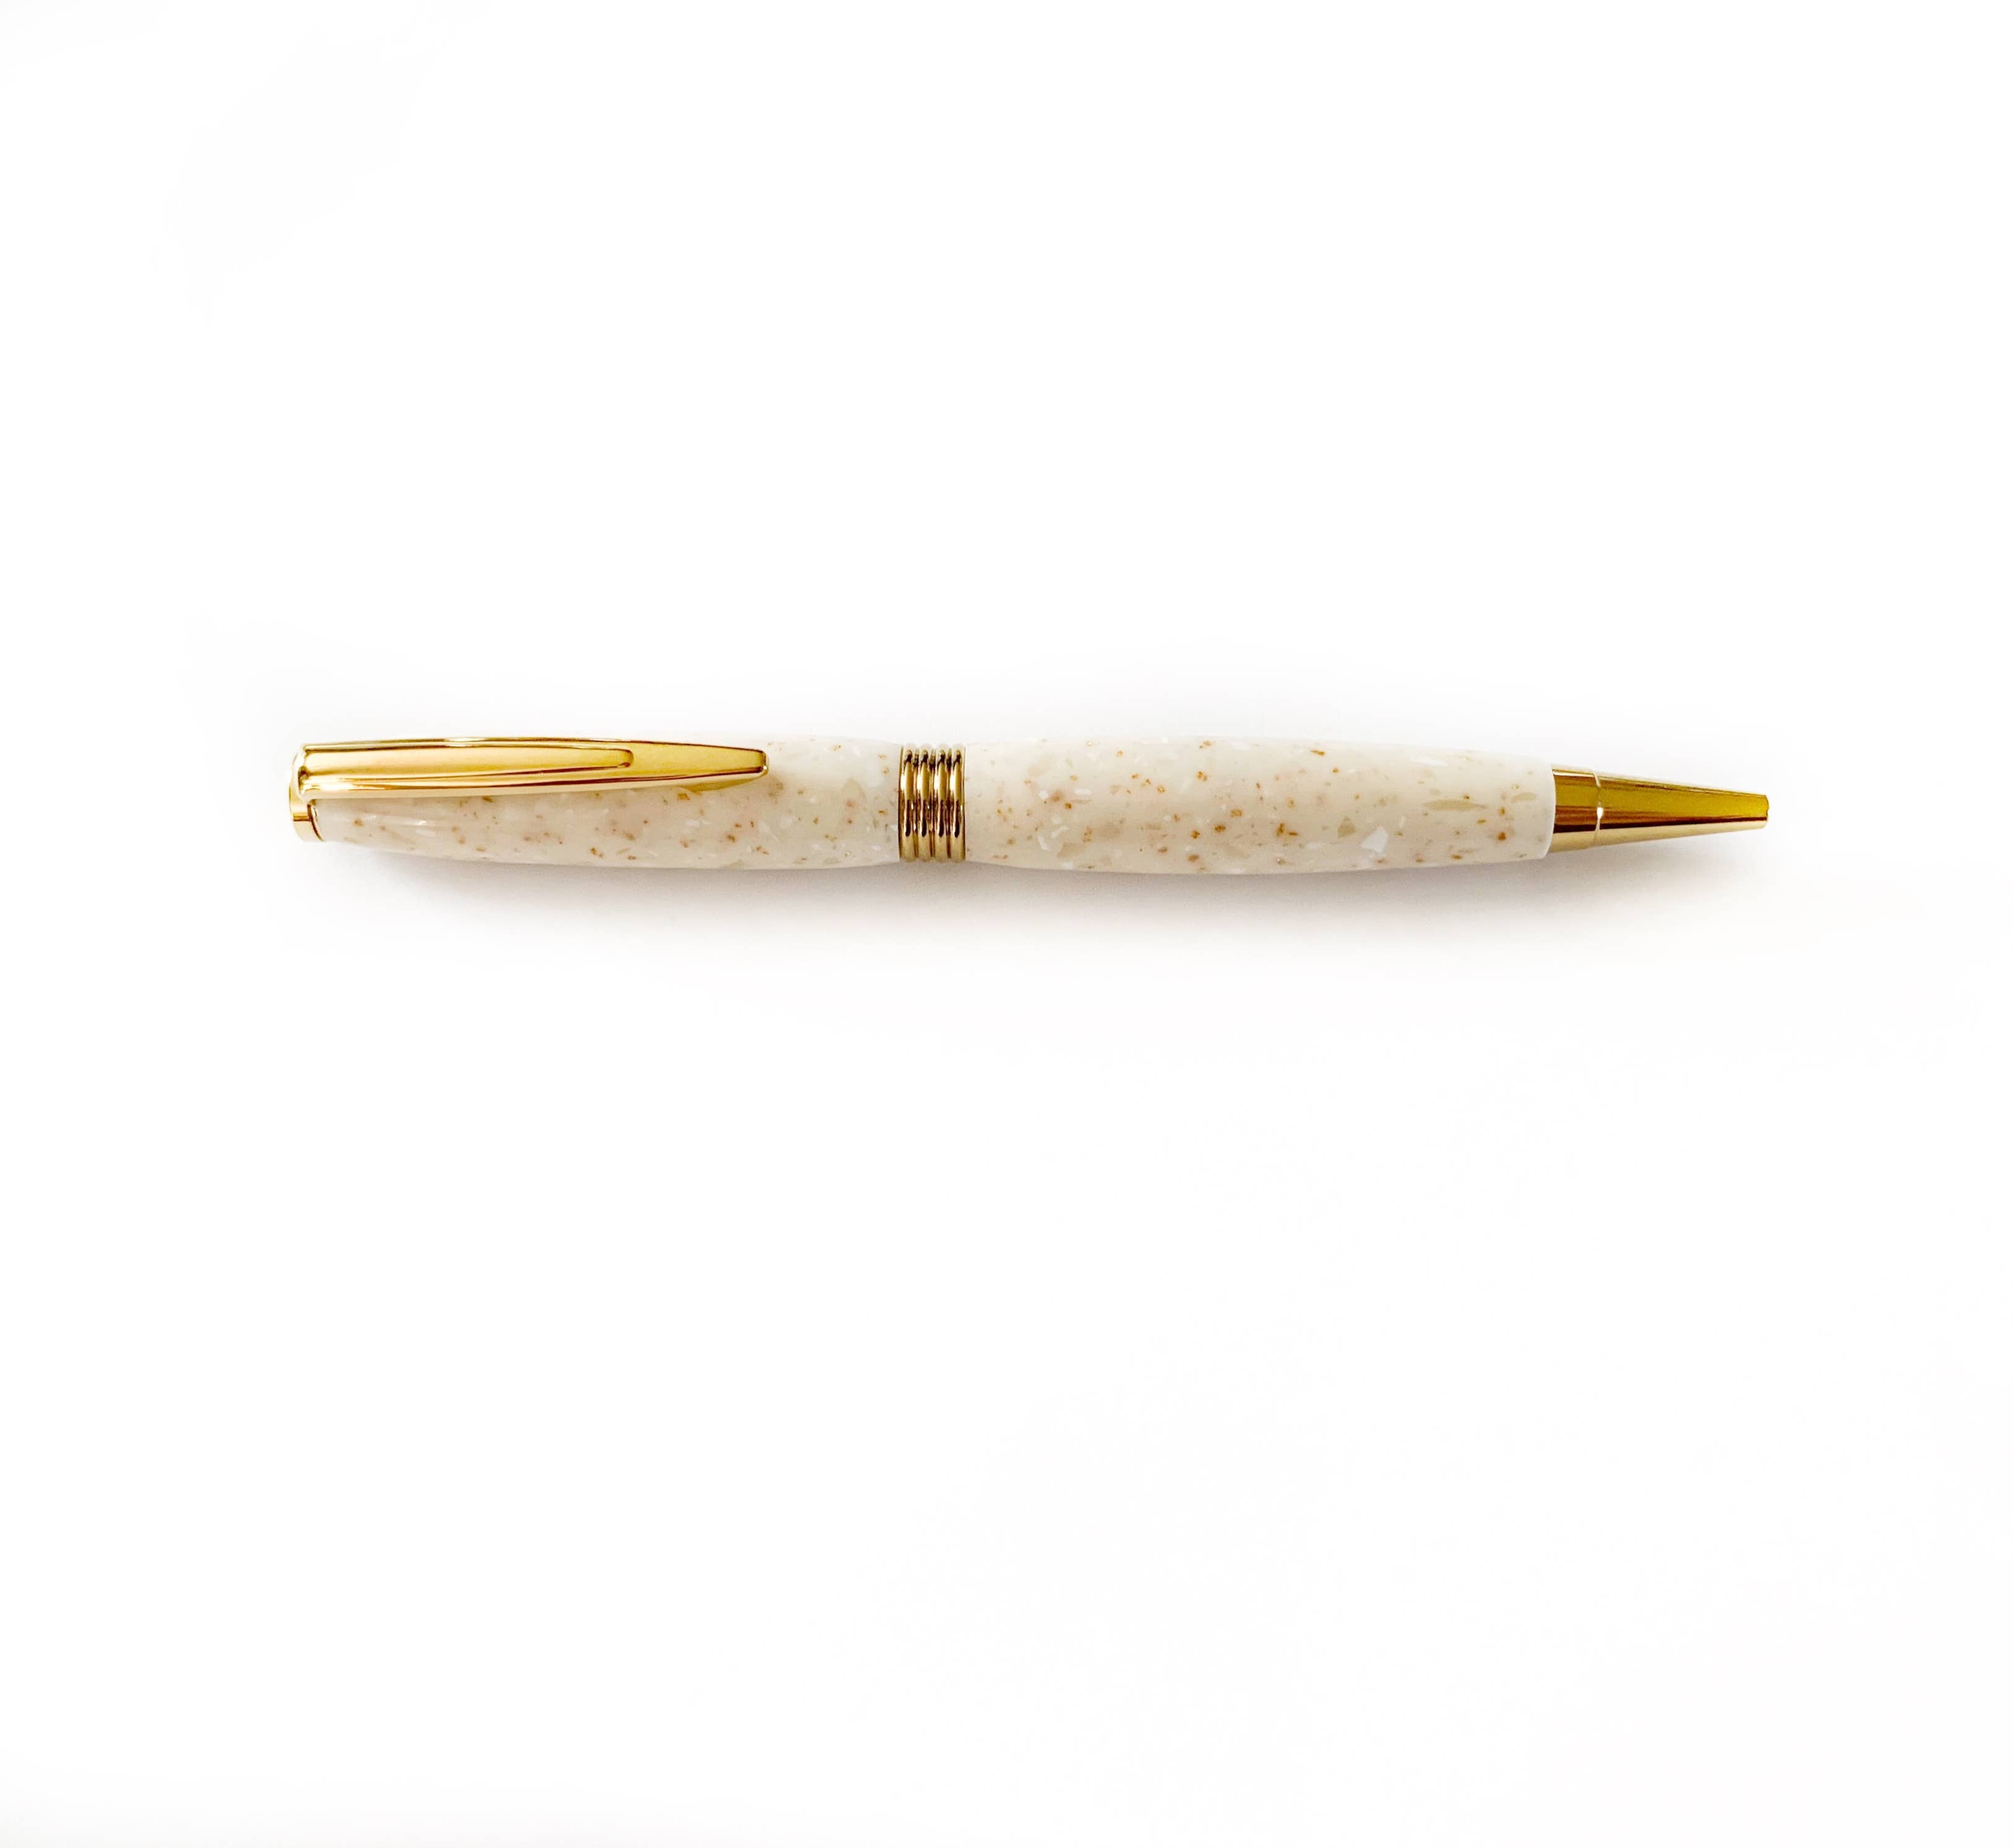 Handmade Slimline Pen in 24KT {glow in the dark!}